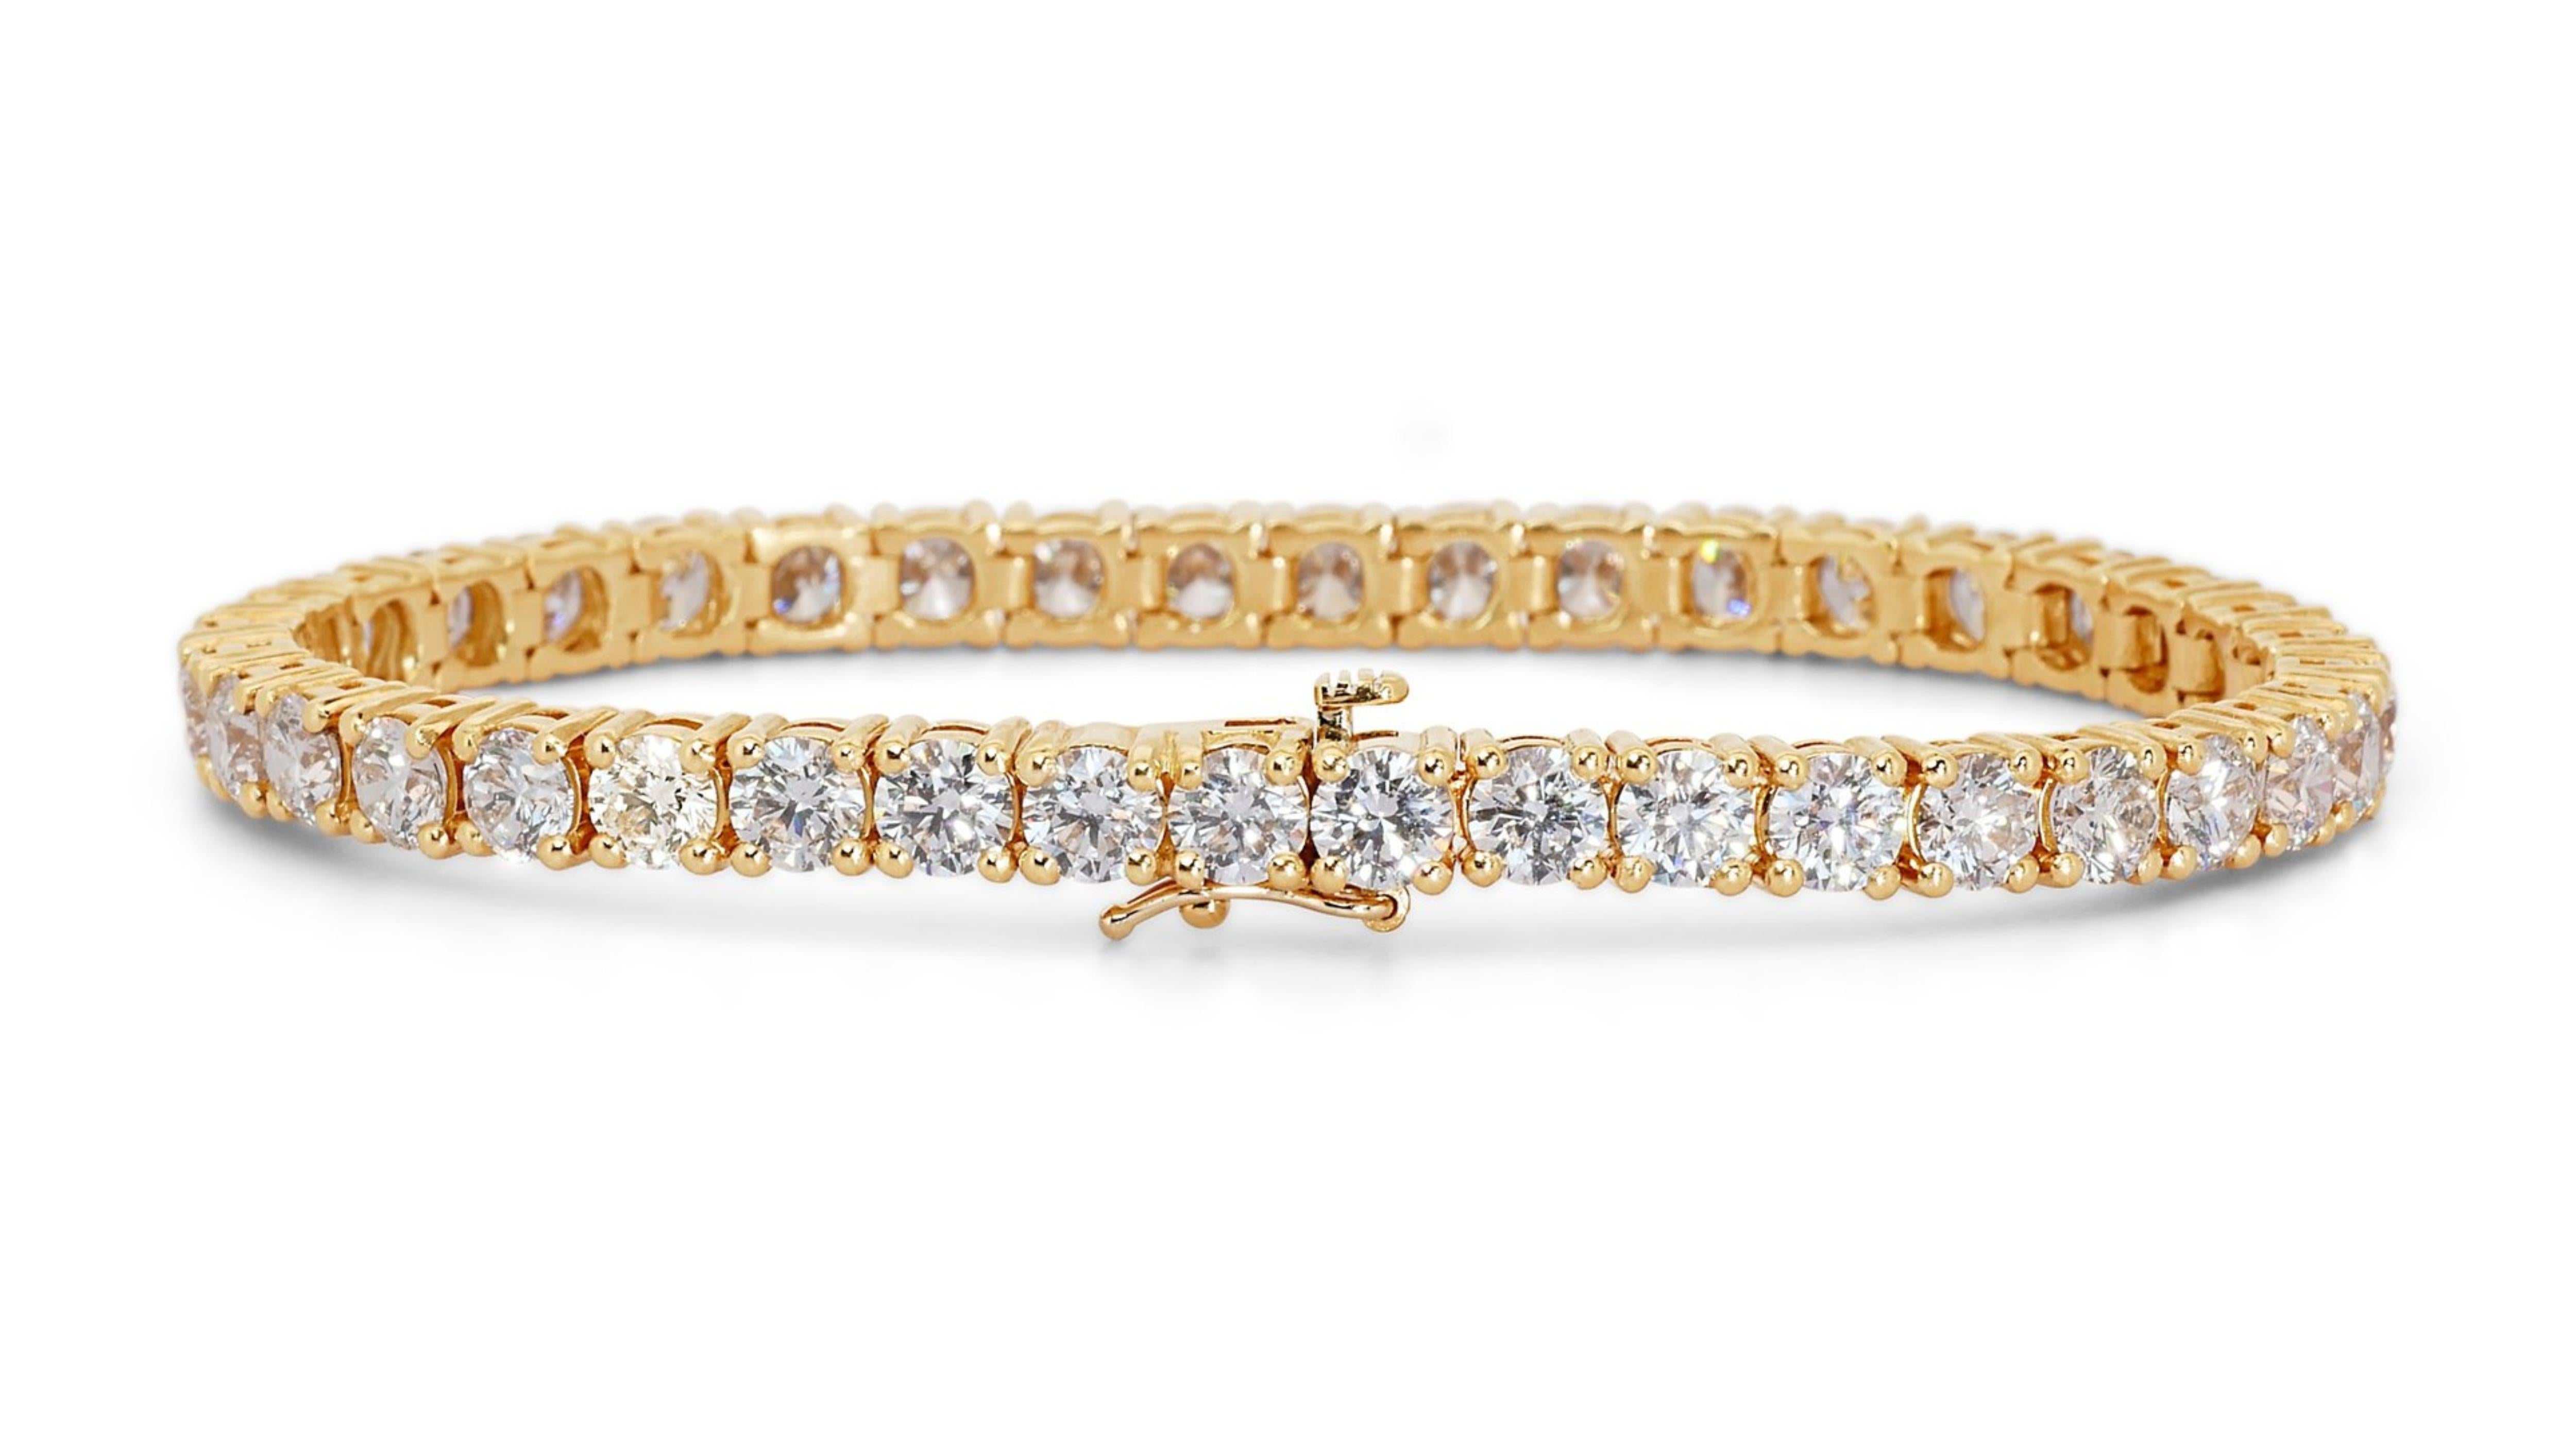 Ravishing 18k Yellow Gold Bracelet w/ 12 ct Natural Diamond IGI Certificate For Sale 2